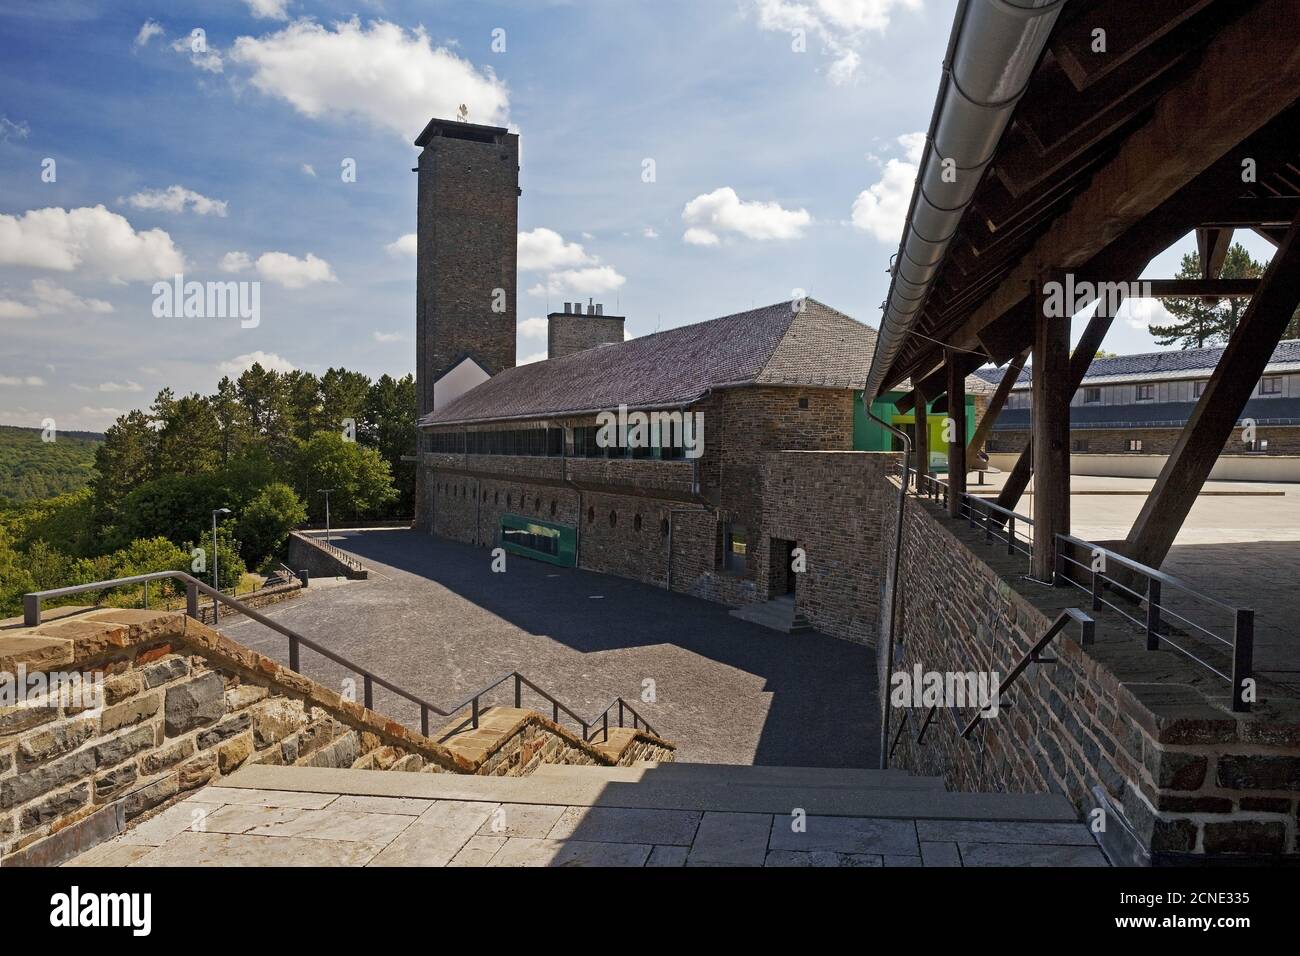 Ehemalige NS-Ordensburg Vogelsang, Innenhof mit Turm, Schleiden, Deutschland, Europa Stockfoto